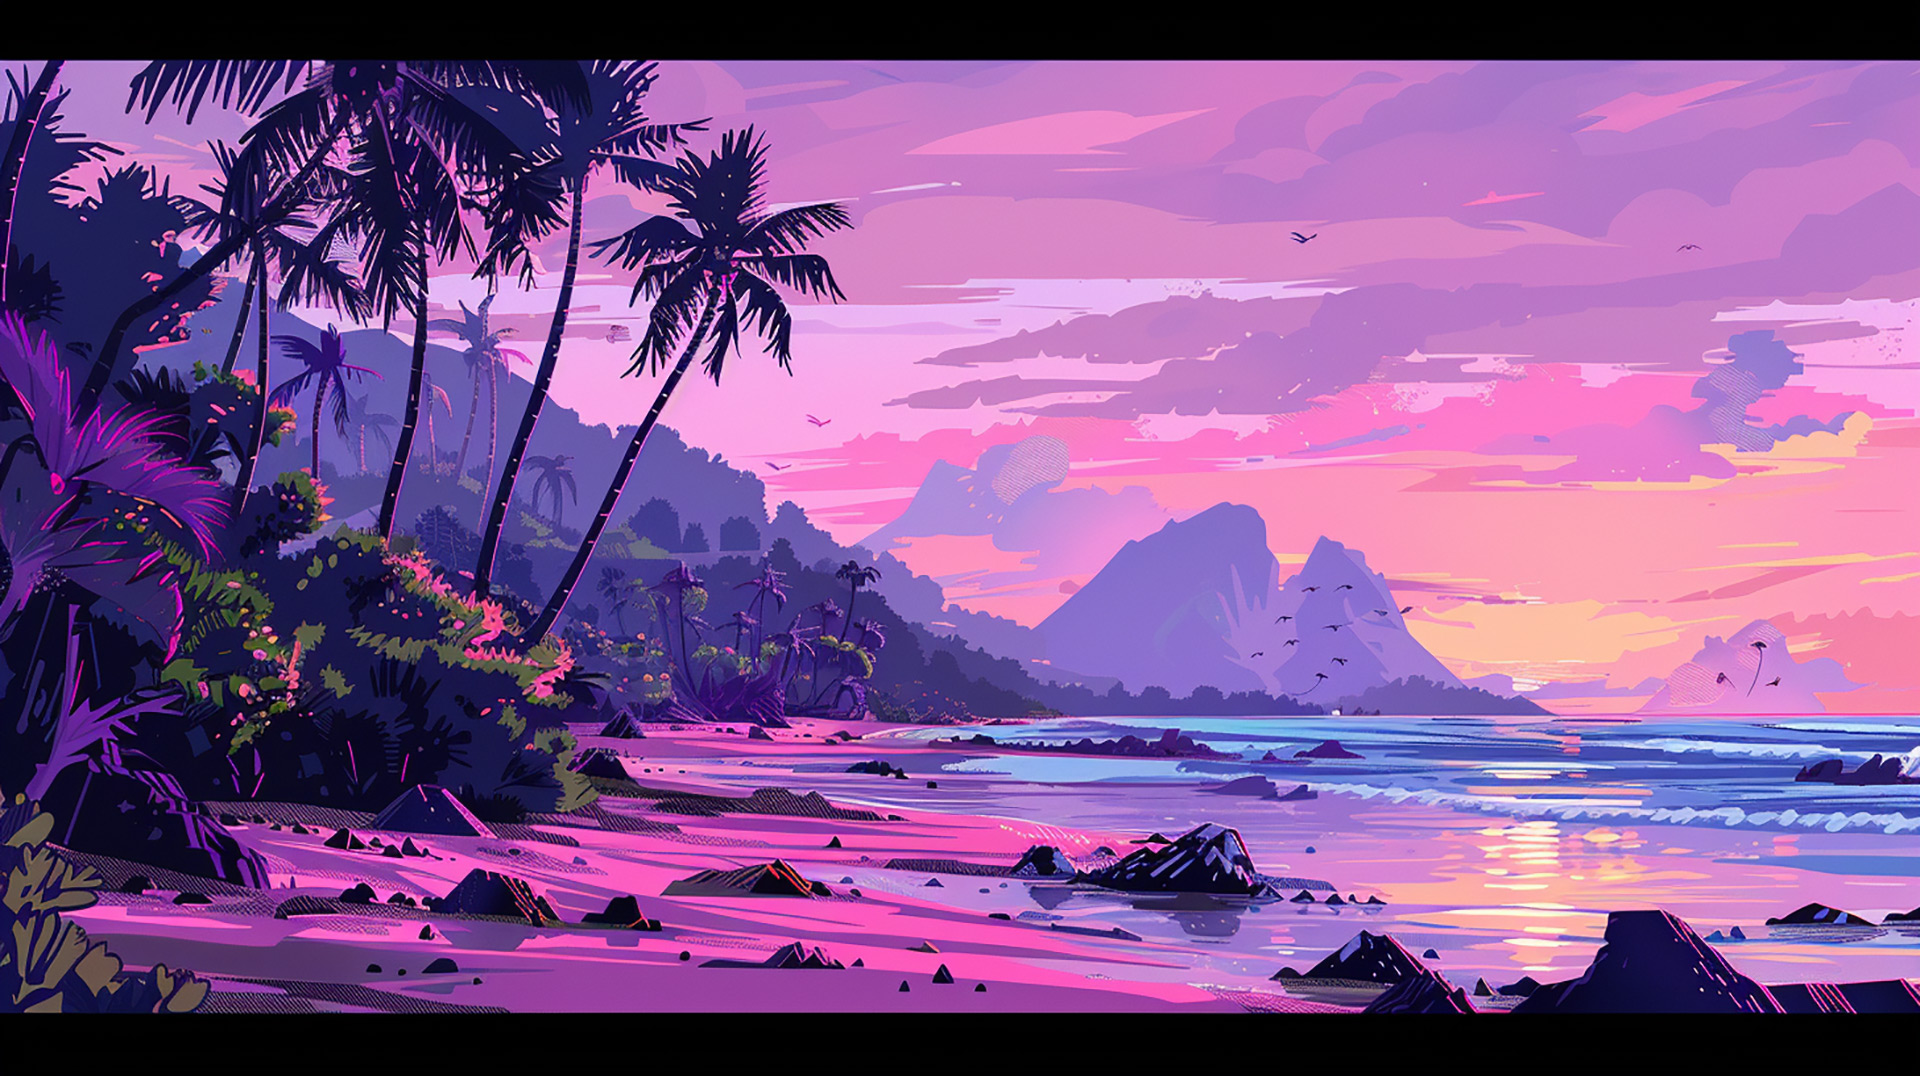 Sunset Dreams: Tropical Beach Horizon